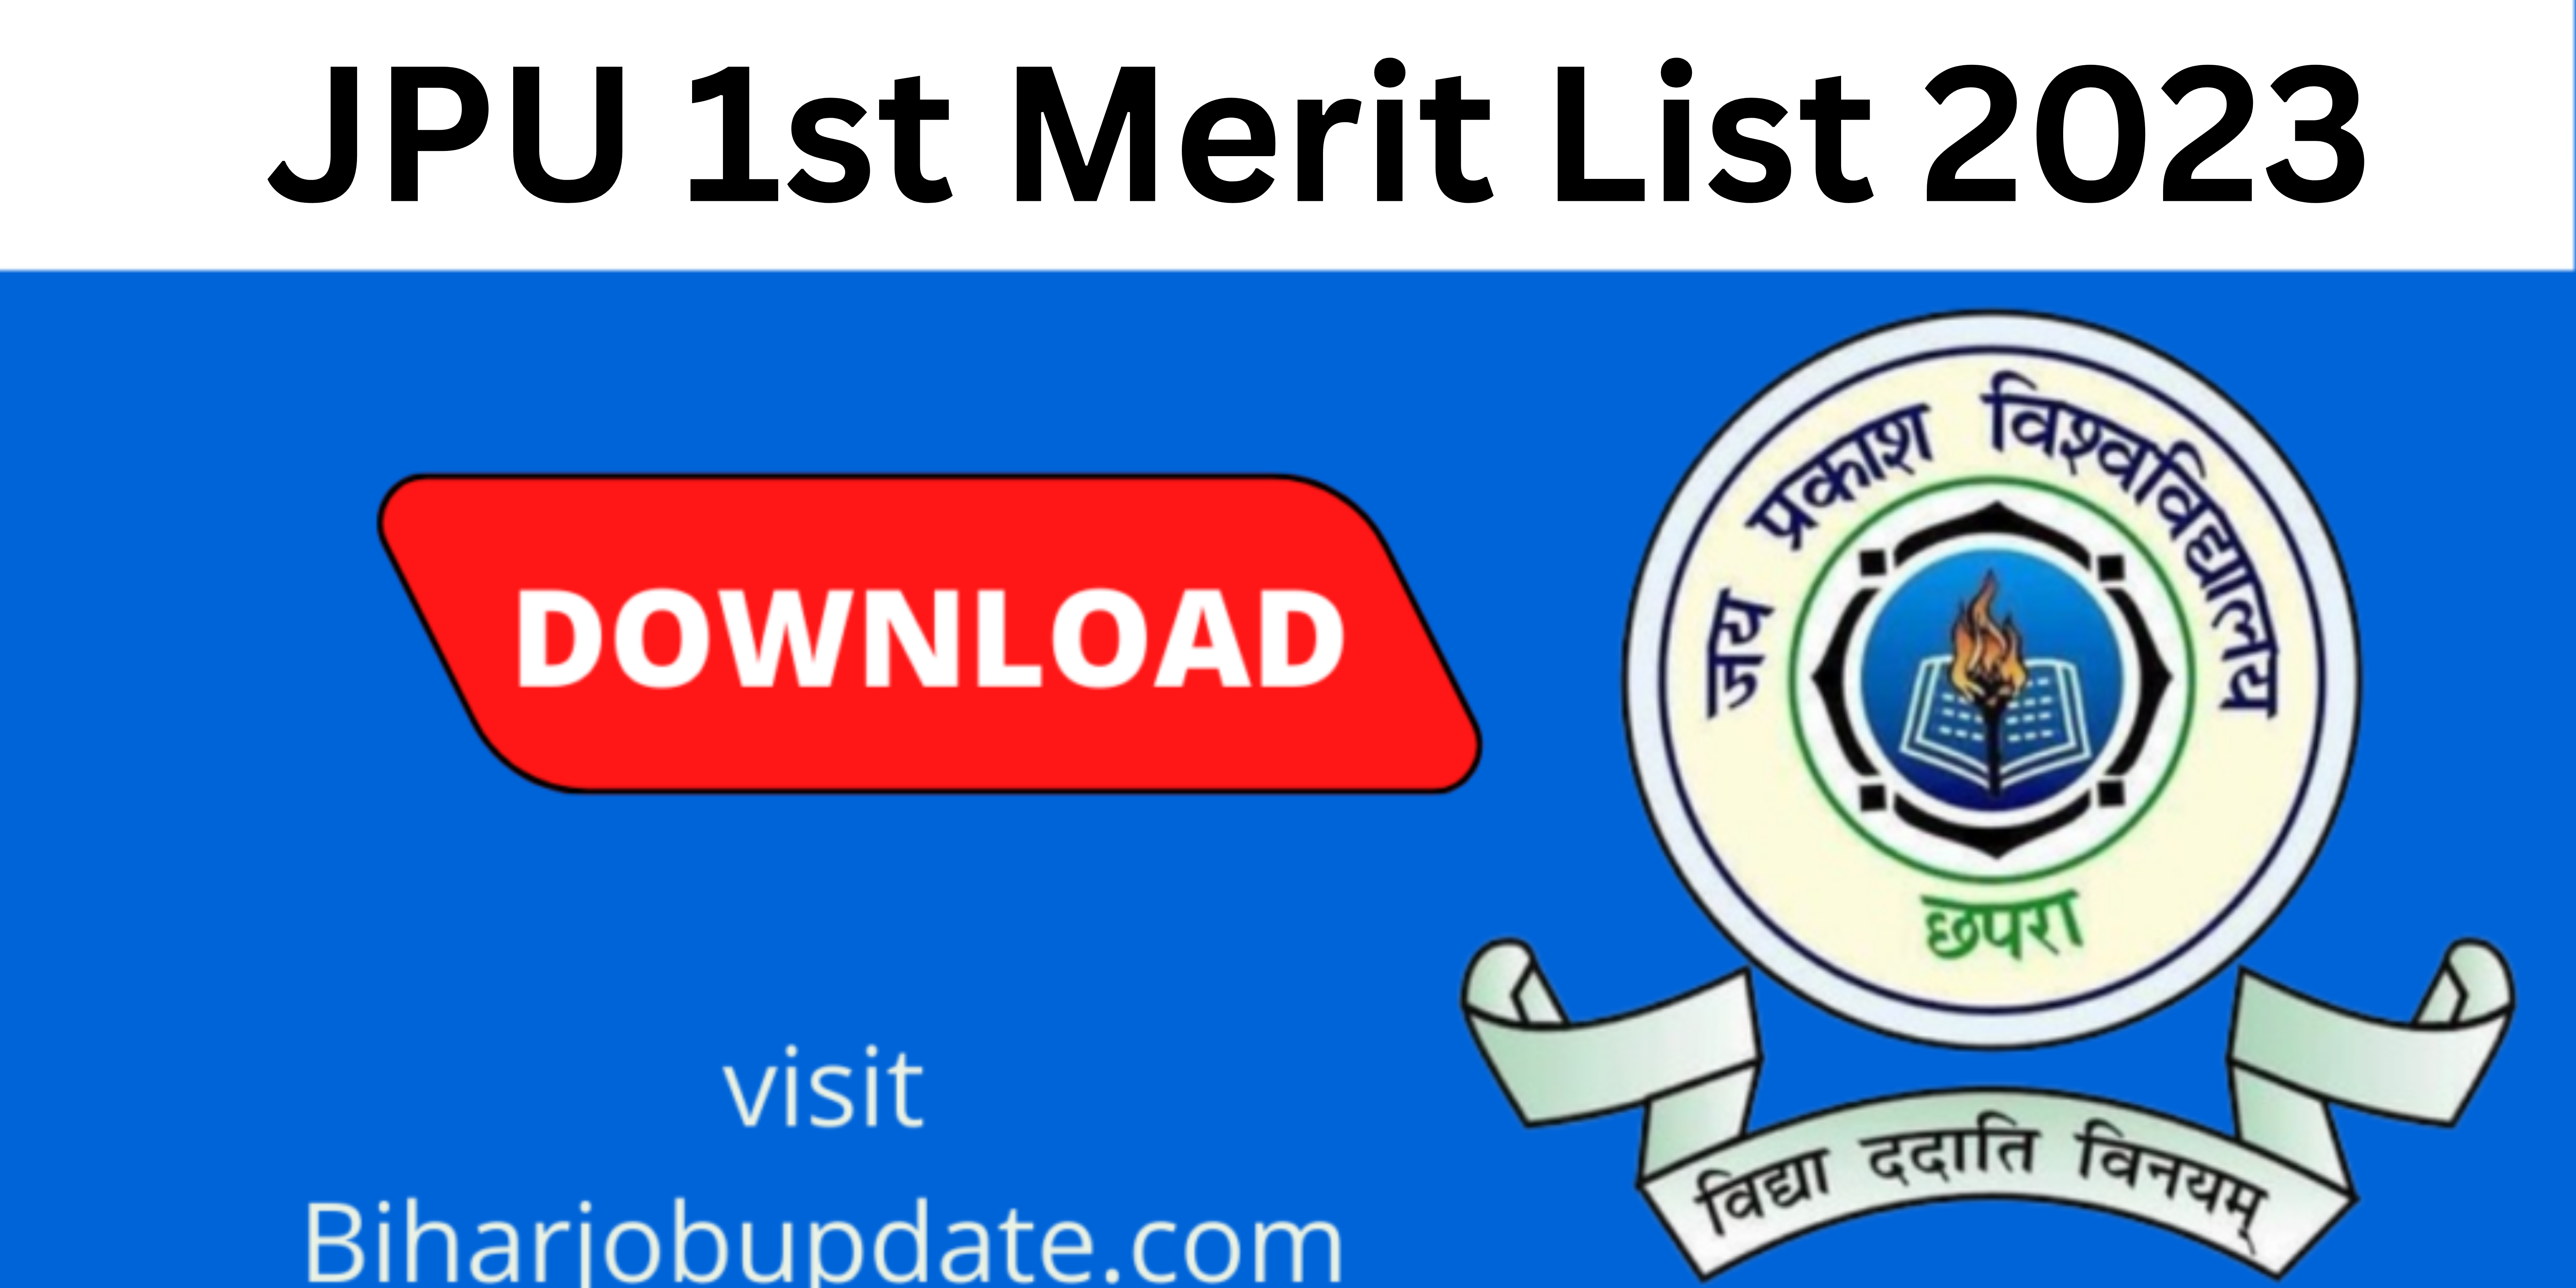 JPU First Merit List 2023